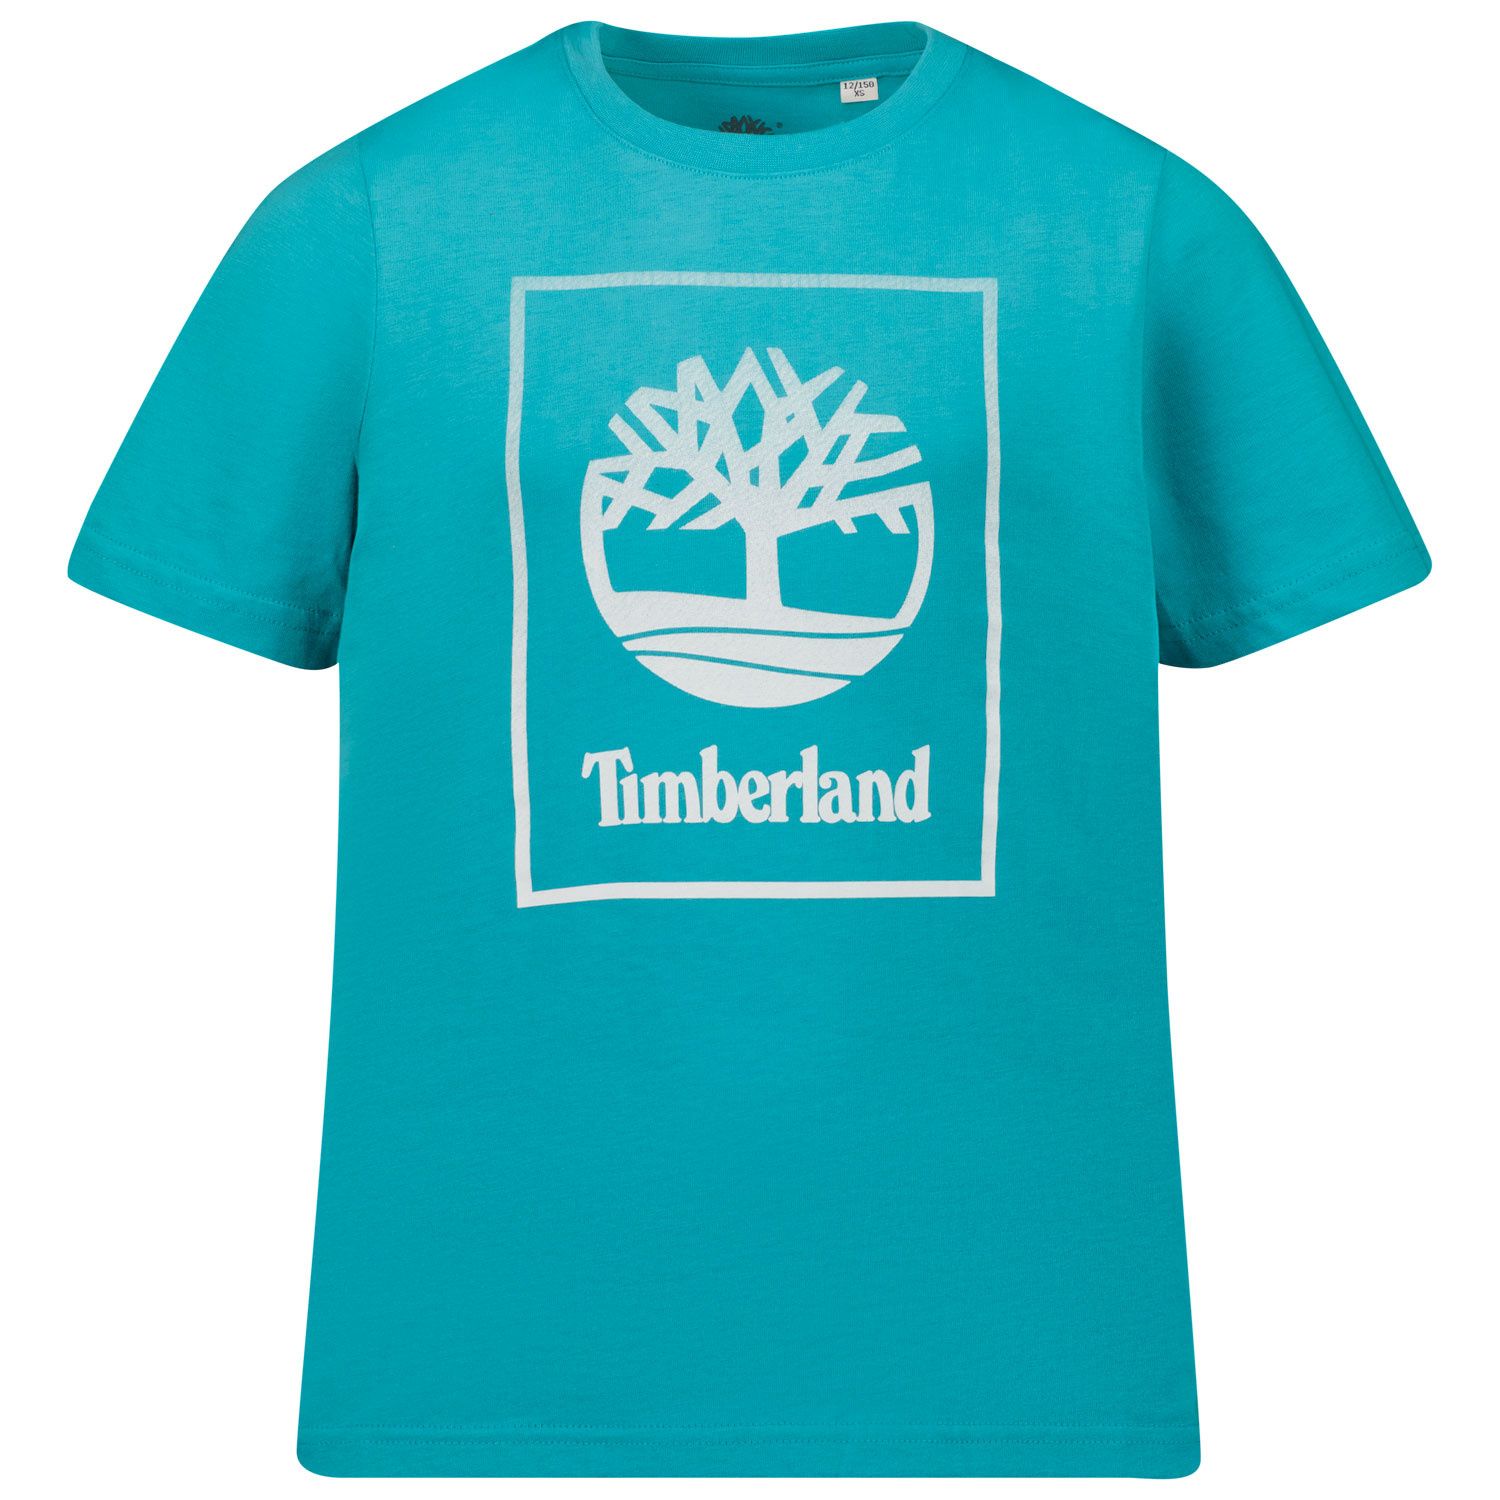 Afbeelding van Timberland T25S83 kinder t-shirt turquoise